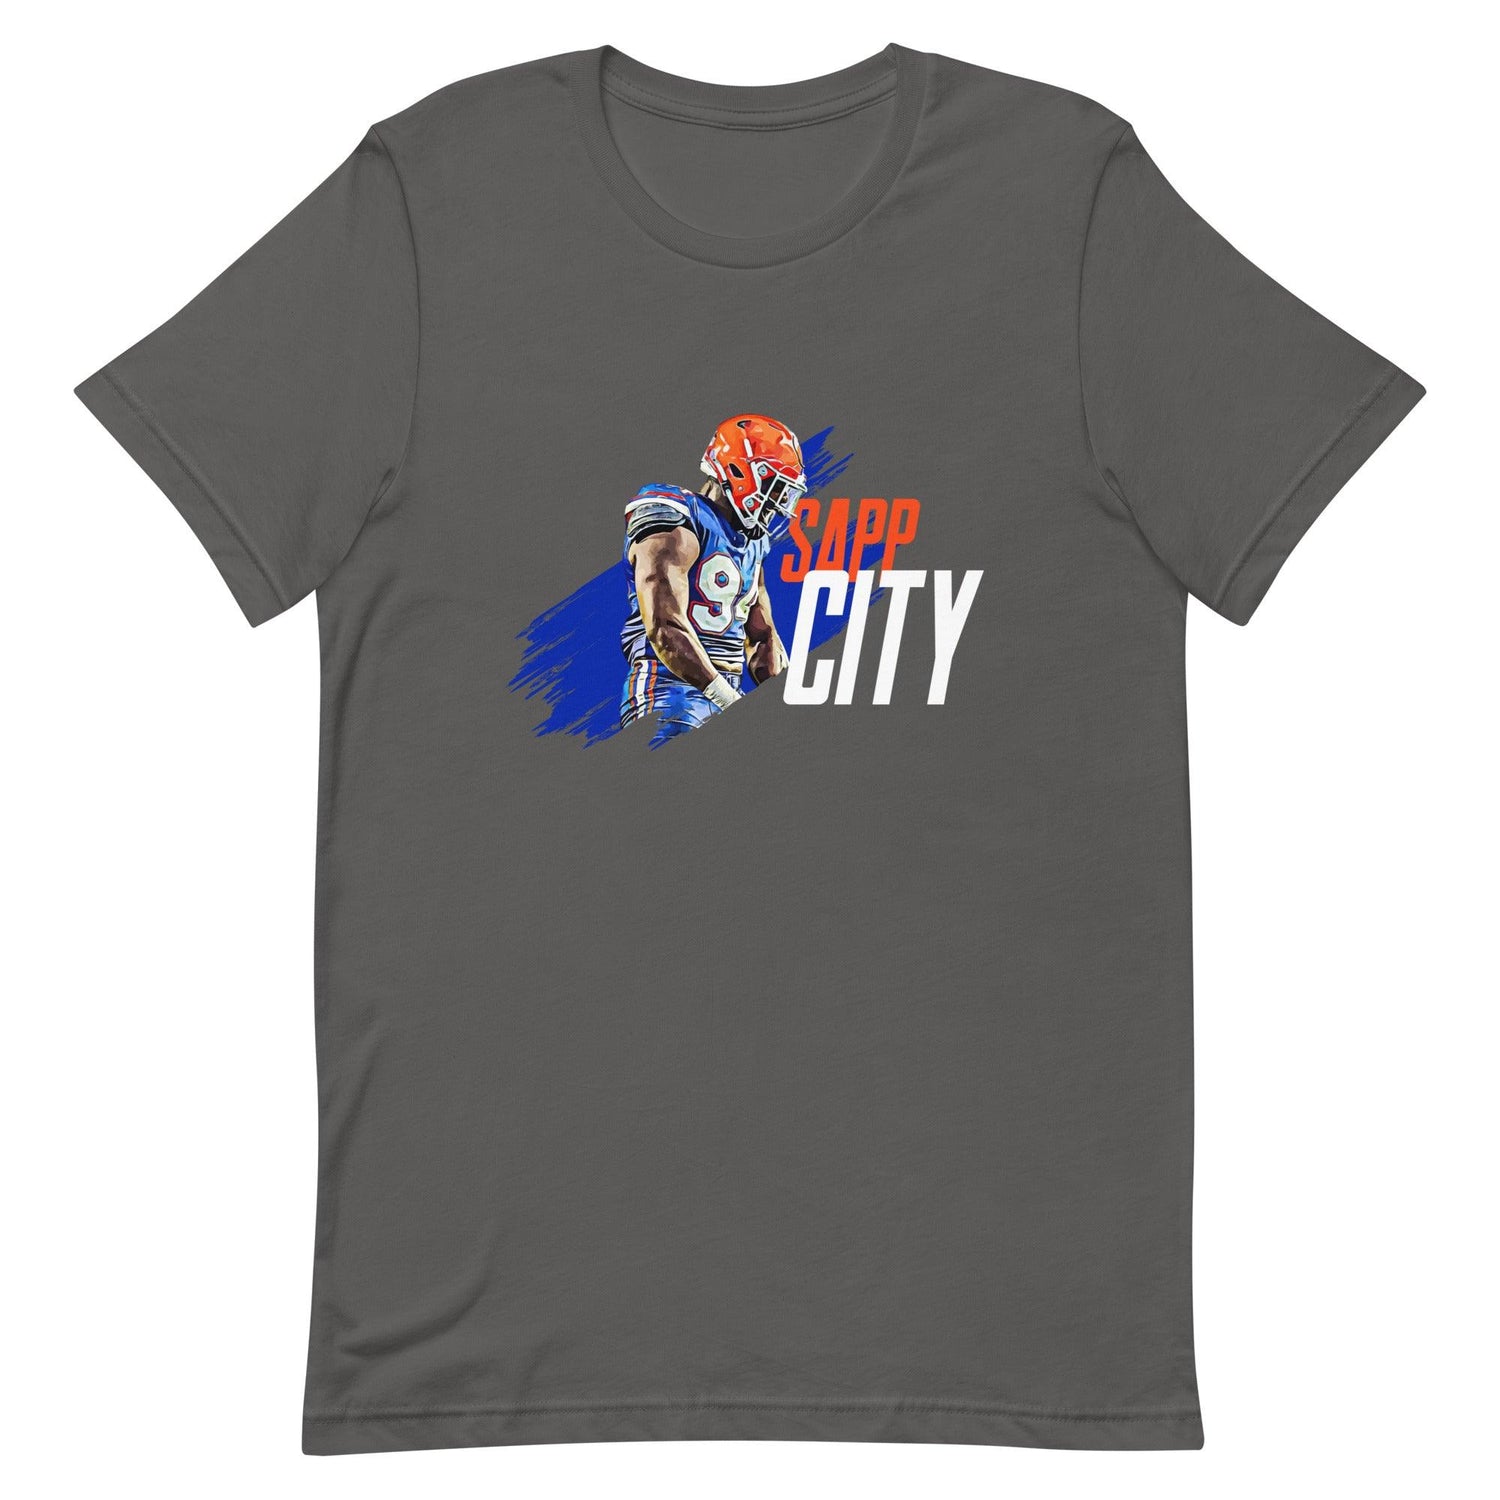 Tyreak Sapp "Sapp City" t-shirt - Fan Arch